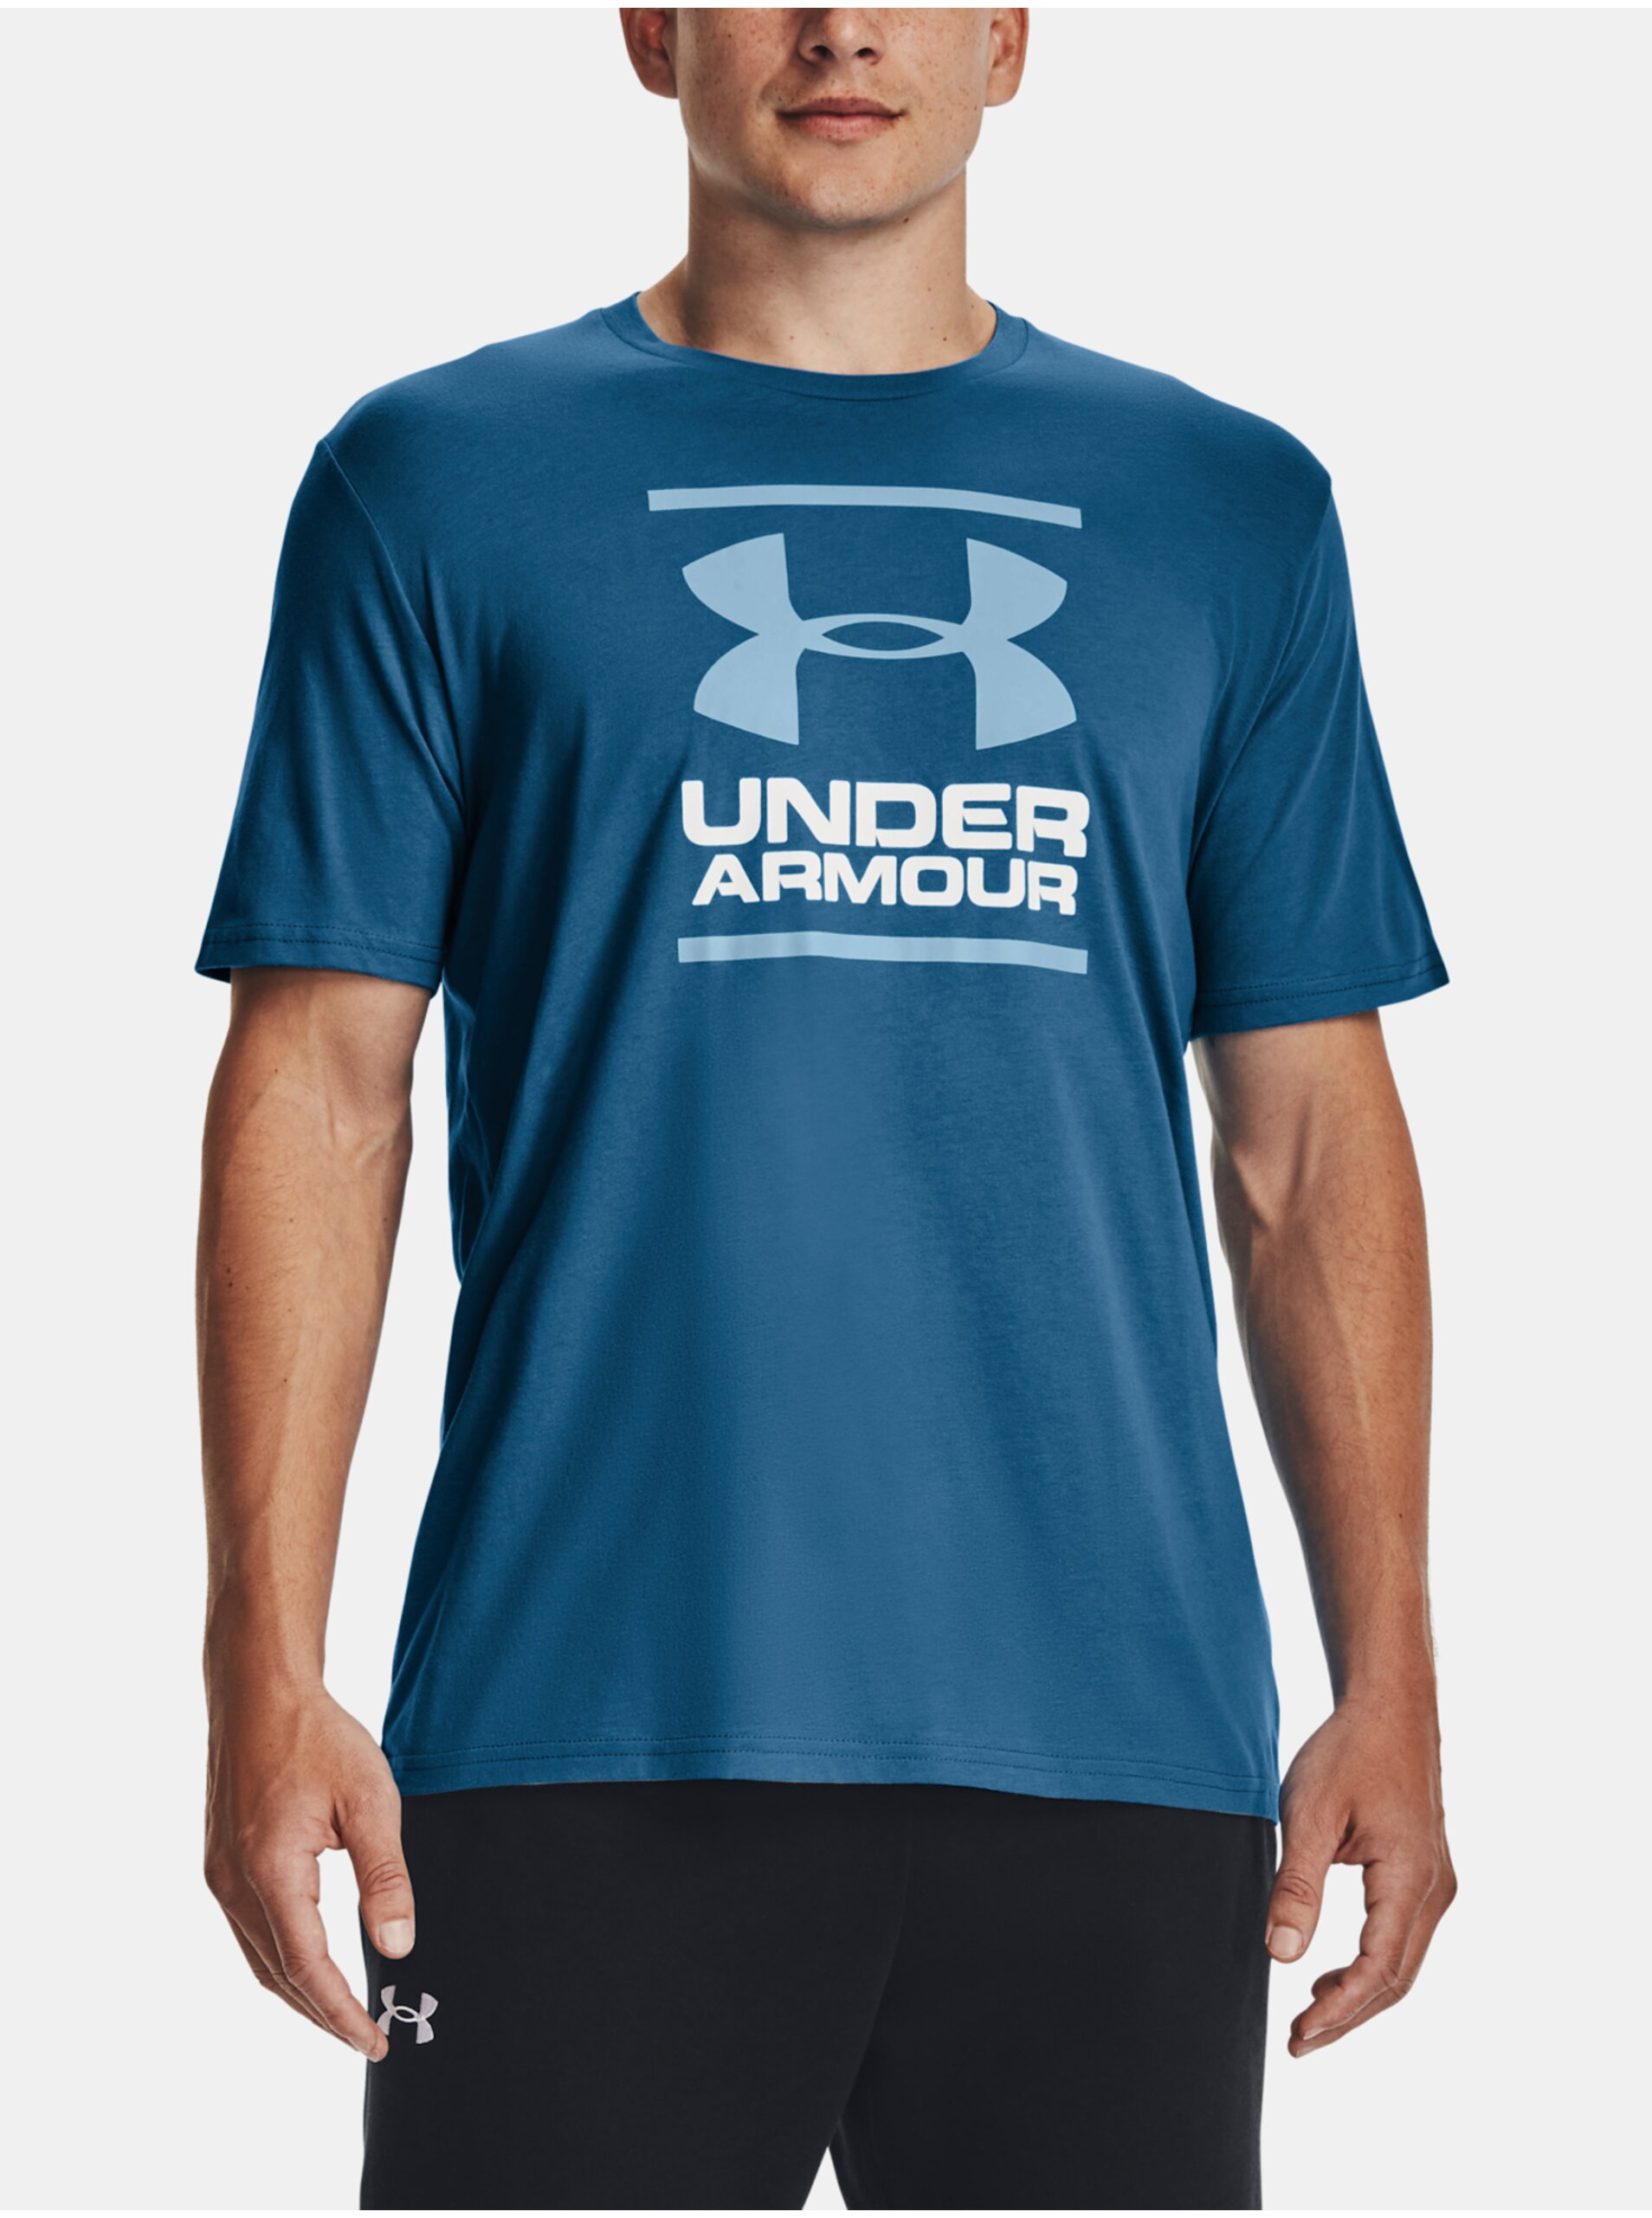 Lacno Modré pánske športové tričko Under Armour Foundations